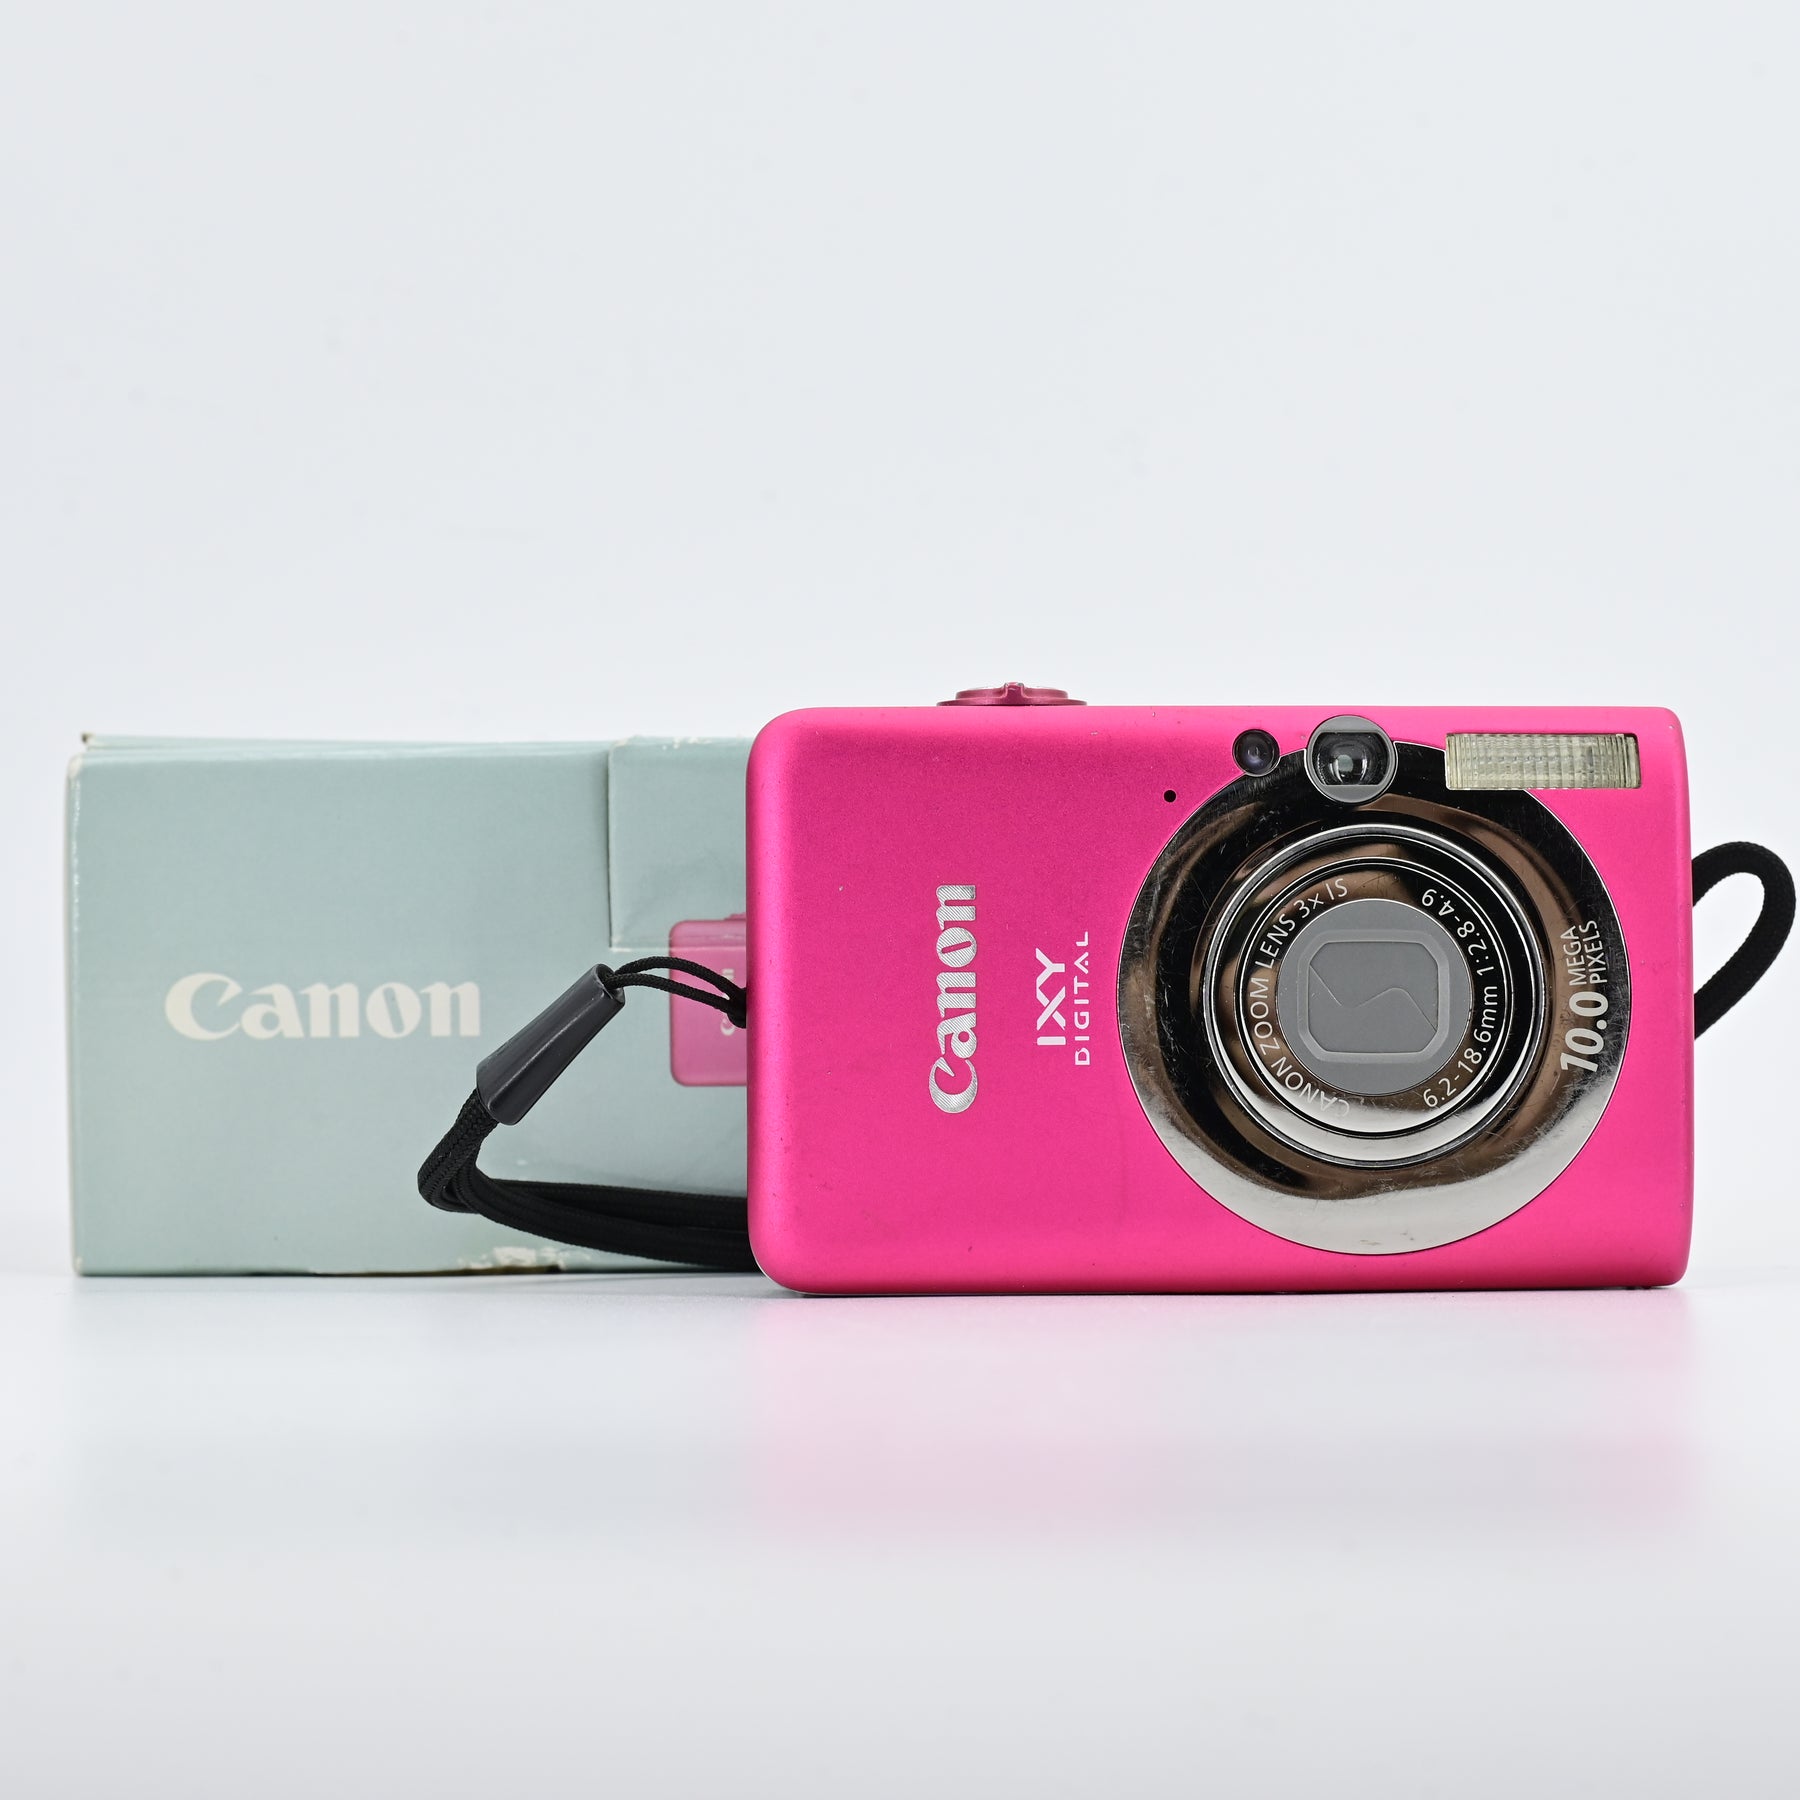 Canon IXY DIGITAL 110 IS (PowerShot SD1200 IS / Digital IXUS 95 